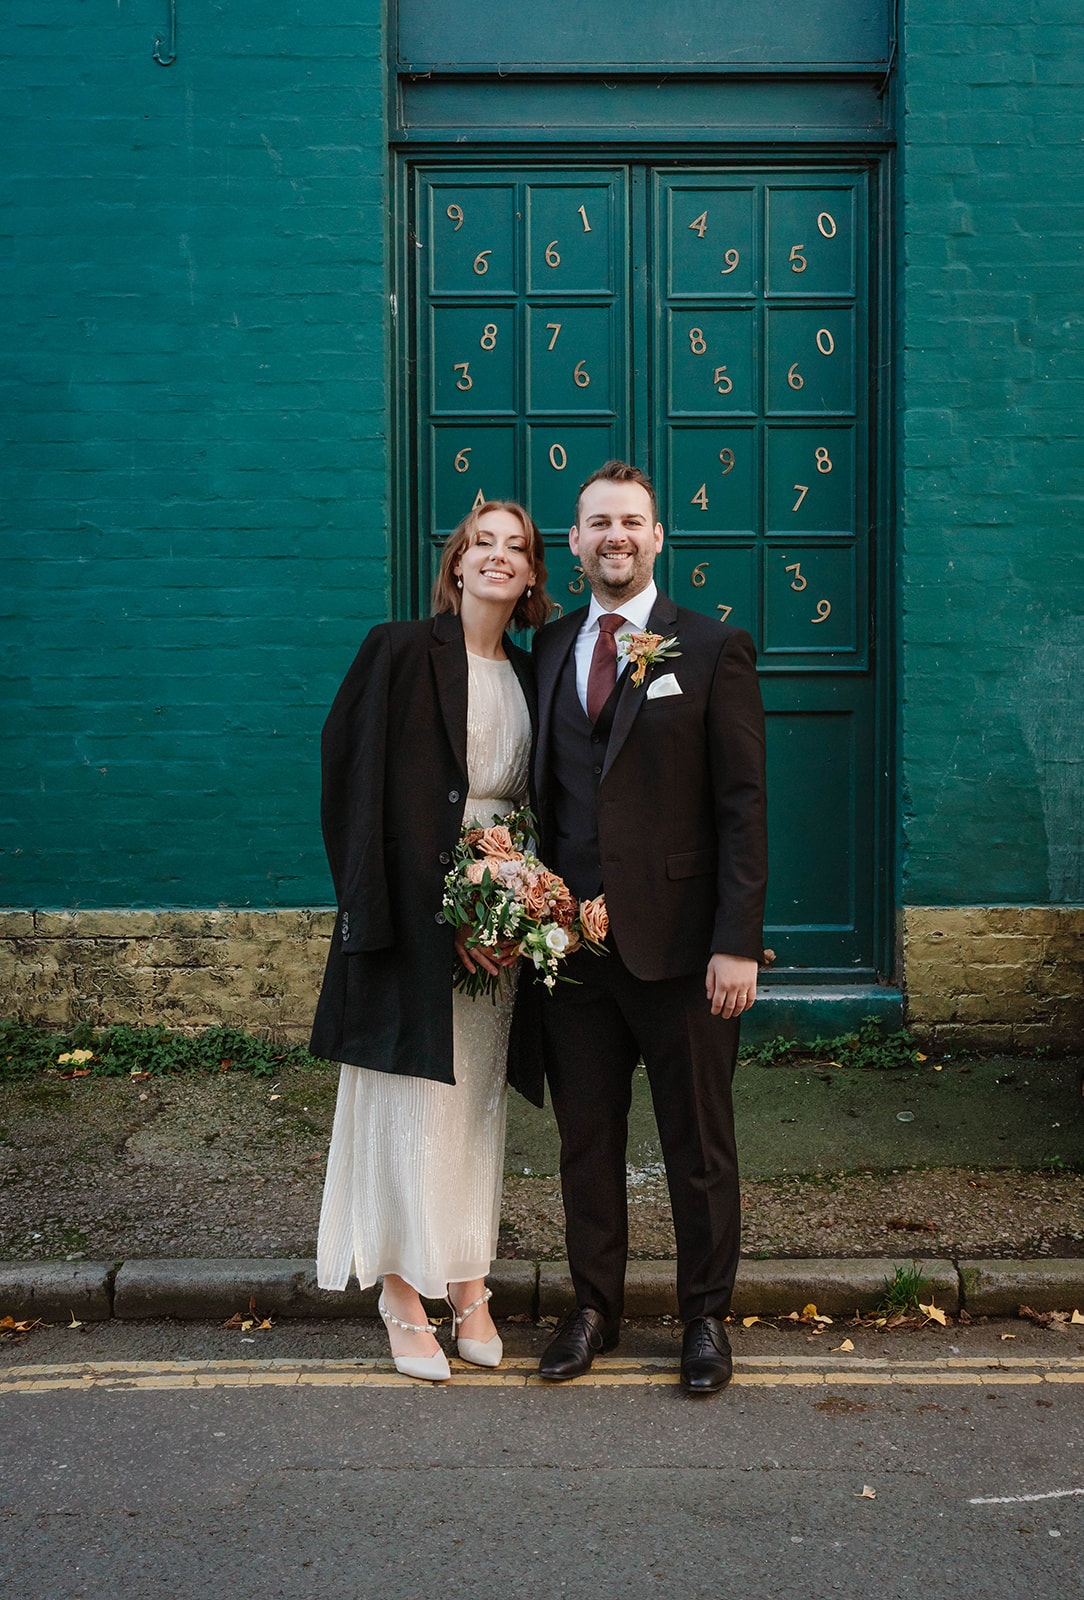 Zara Davis Wedding Photography Cotswolds Gloucestershire Cheltenham Town street candid bride groom